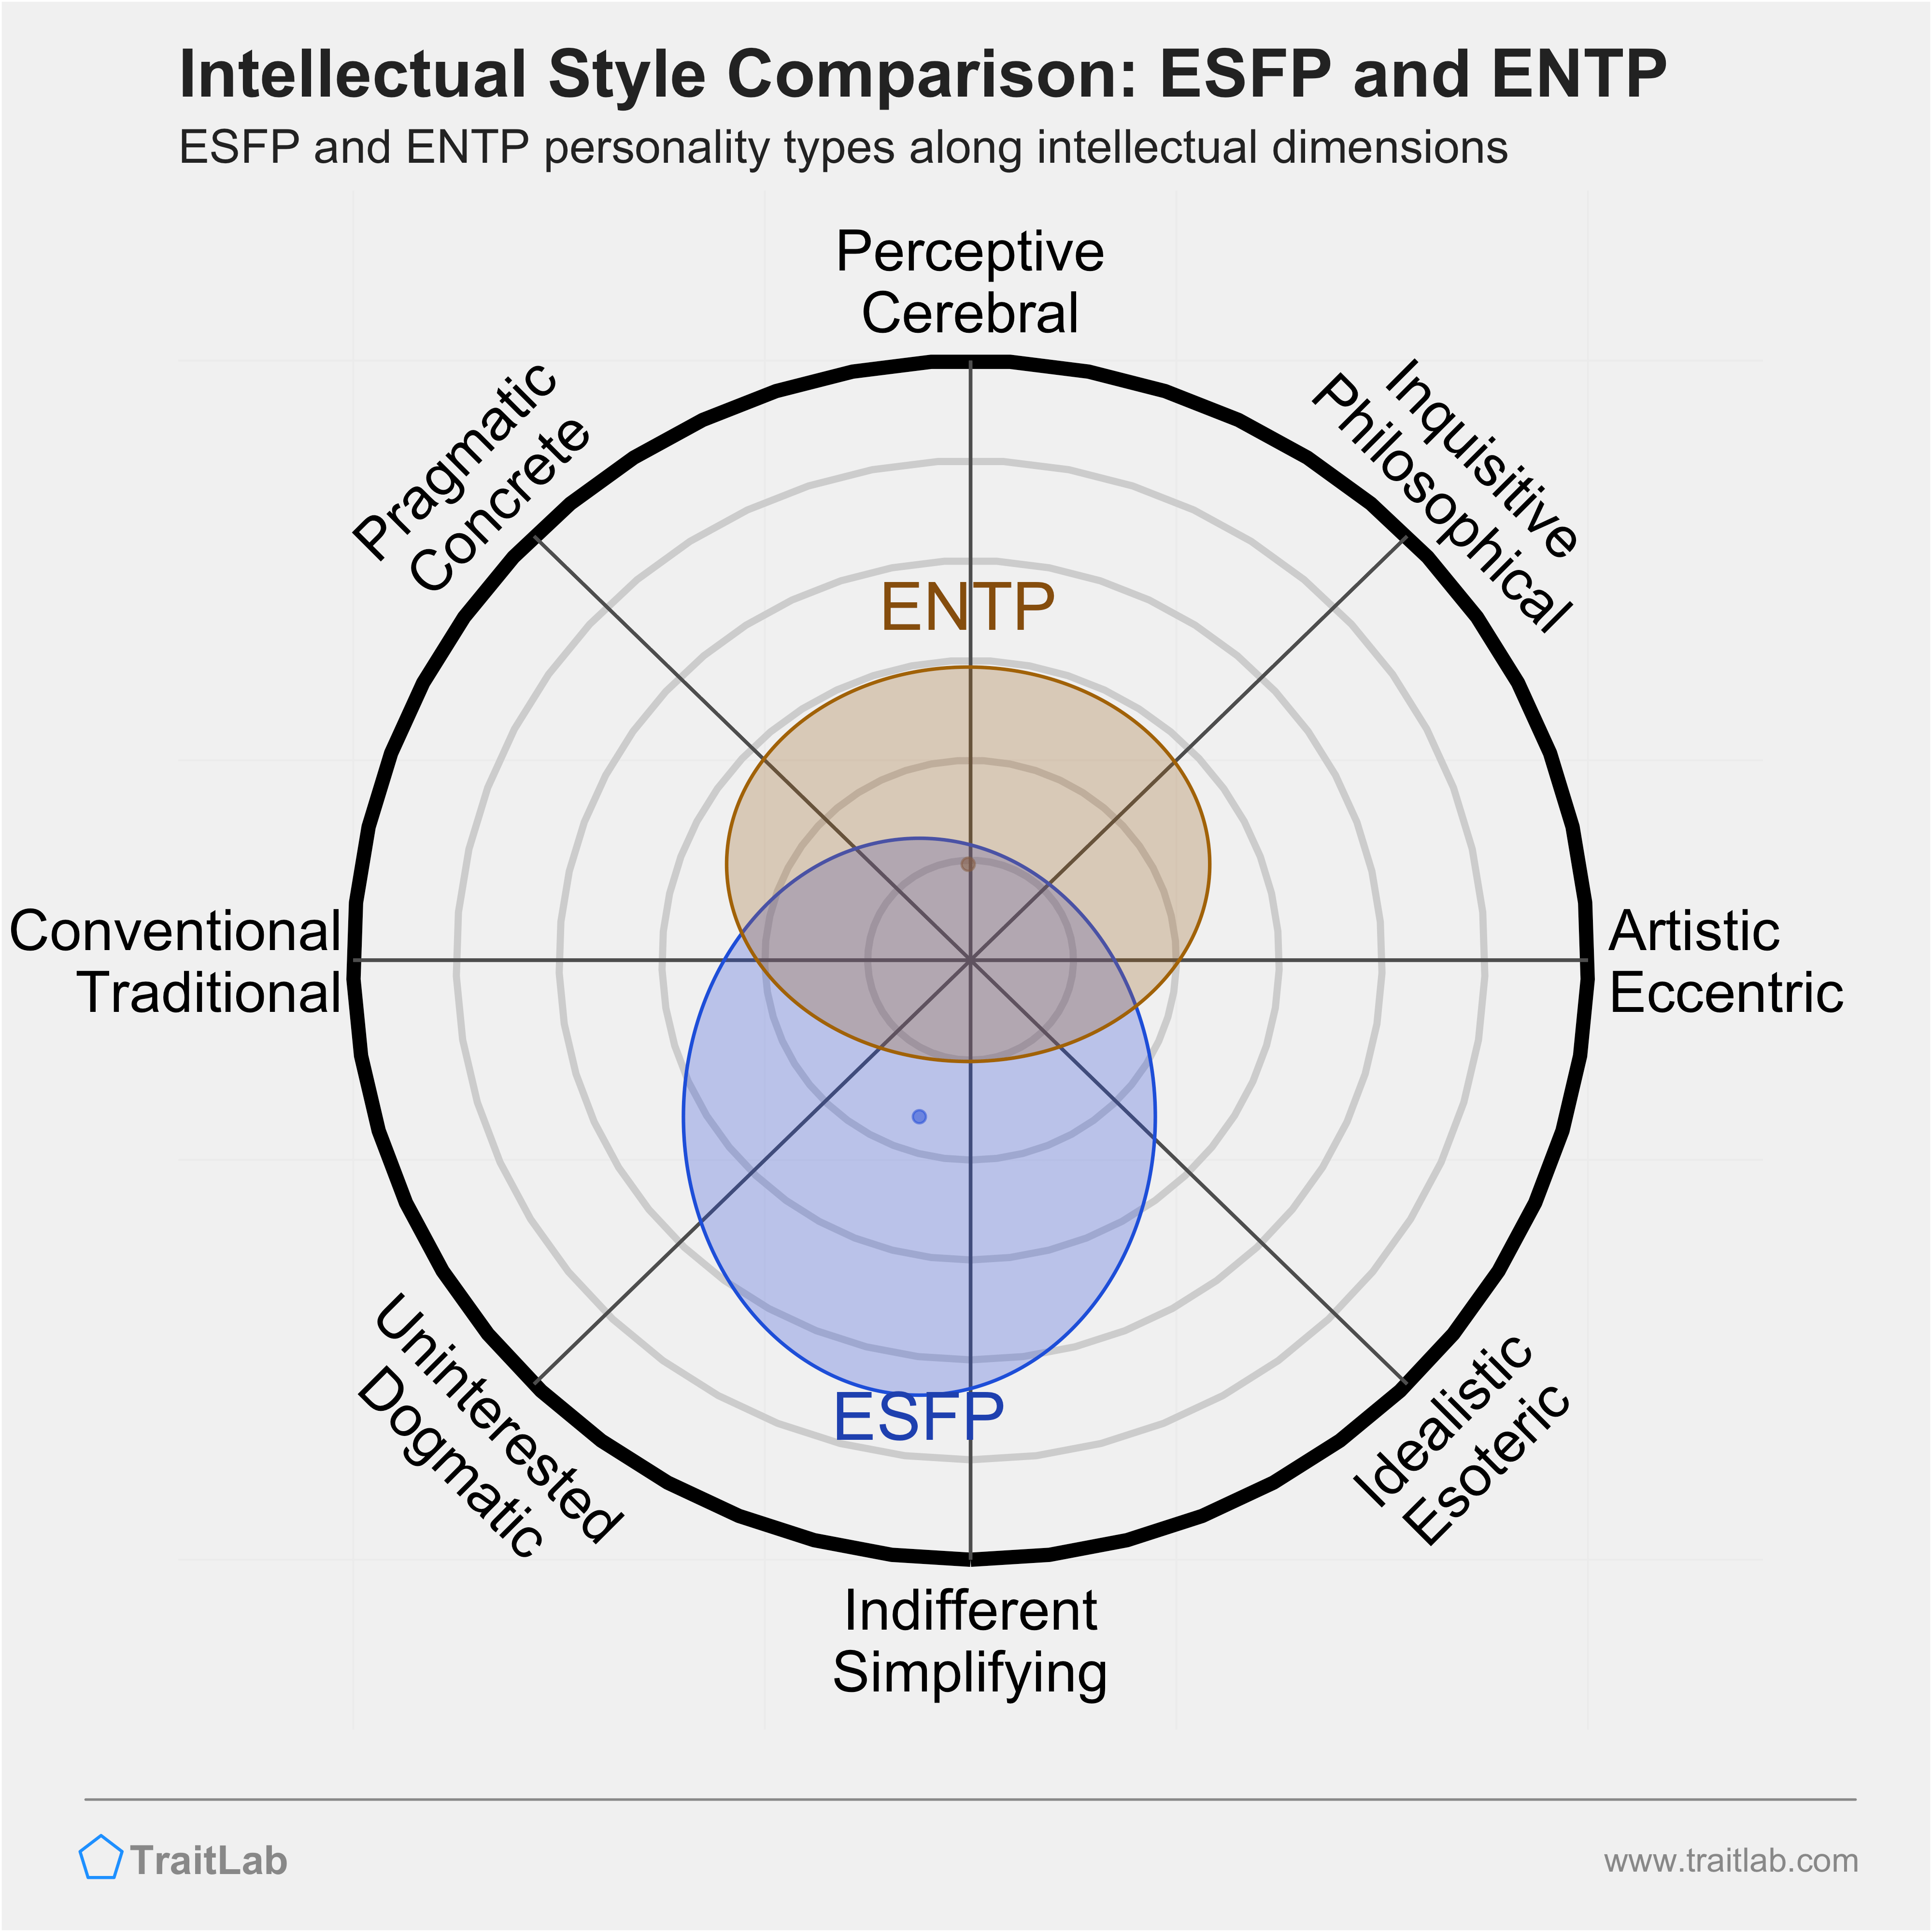 ESFP and ENTP comparison across intellectual dimensions